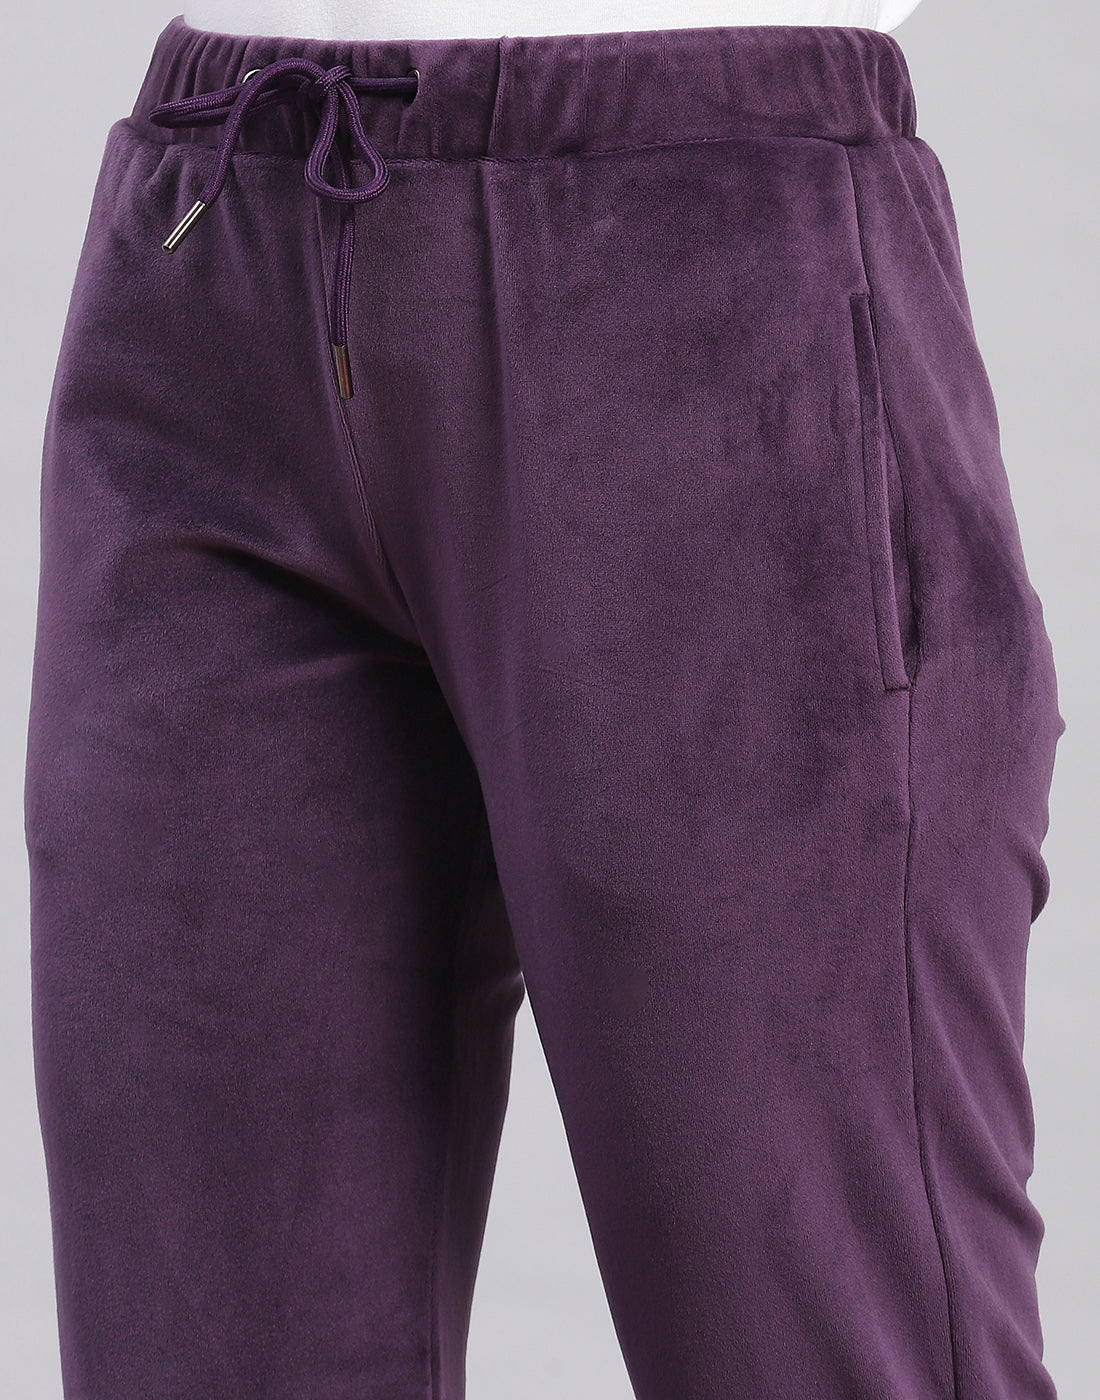 Women Purple Solid Hooded Full Sleeve Tracksuit